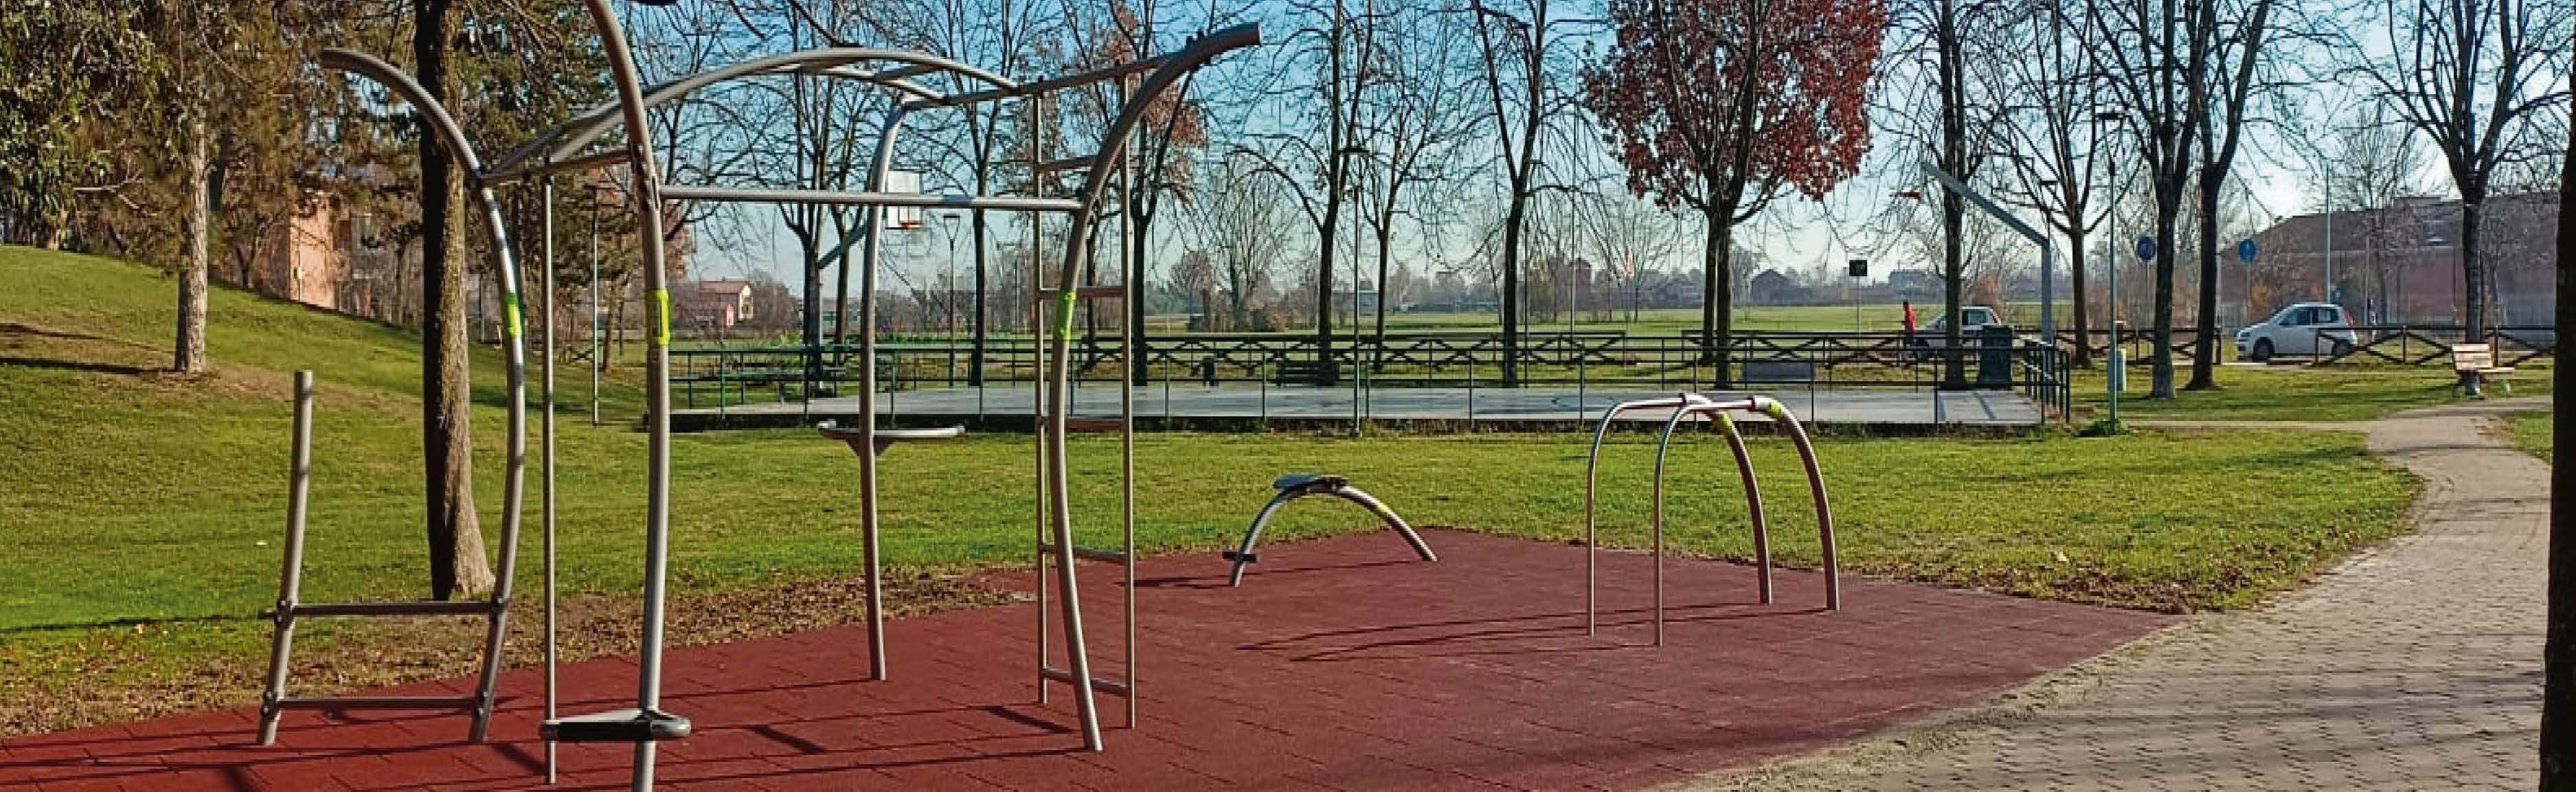 Parco Morvillo-2.jpg